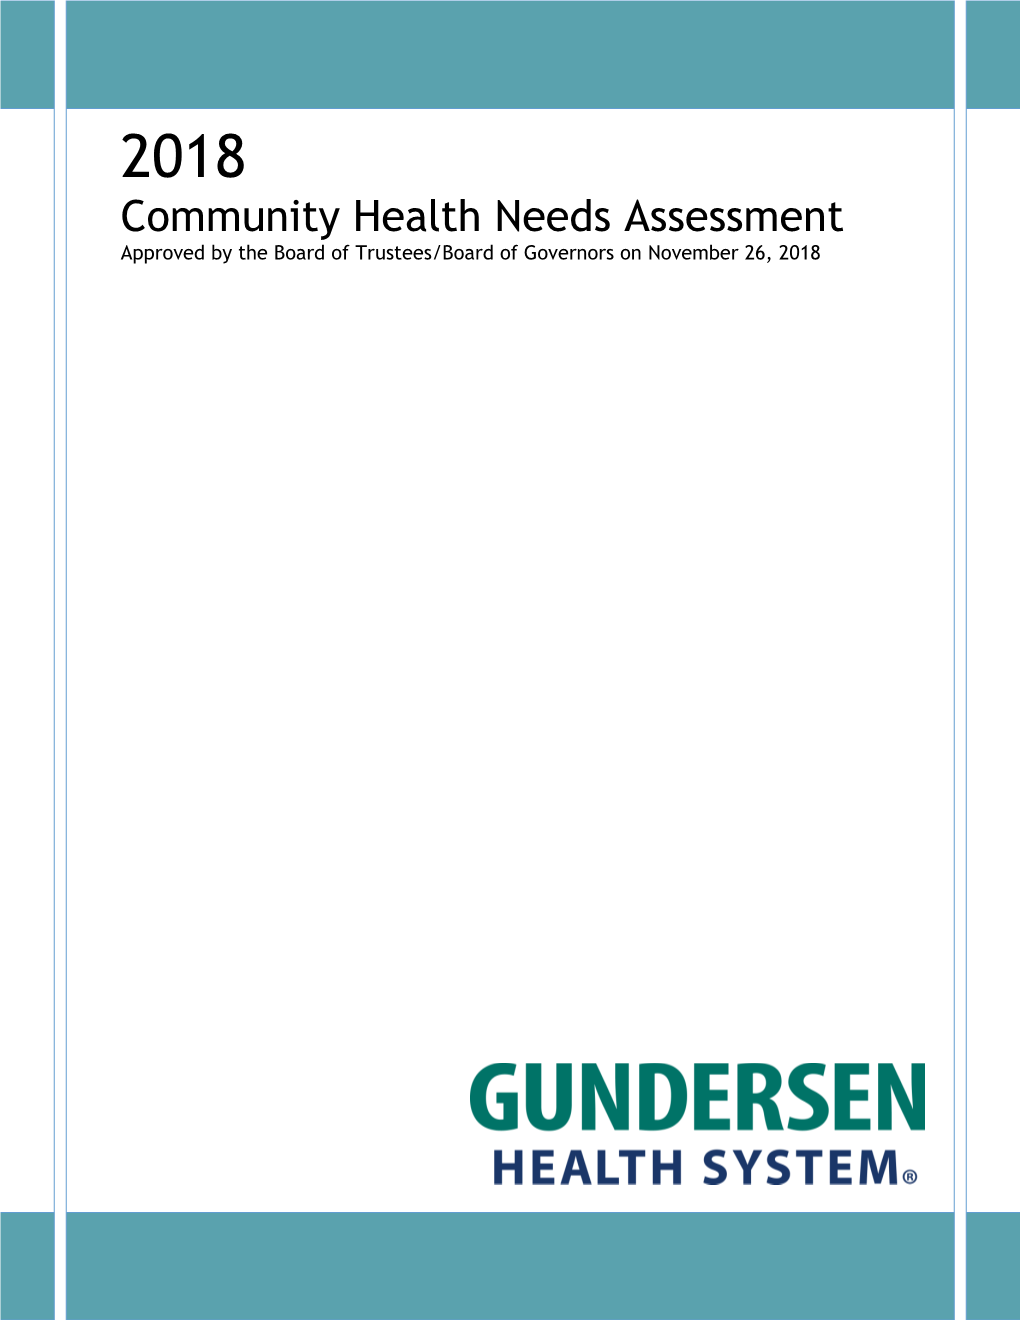 Community Health Needs Assessment for 2018